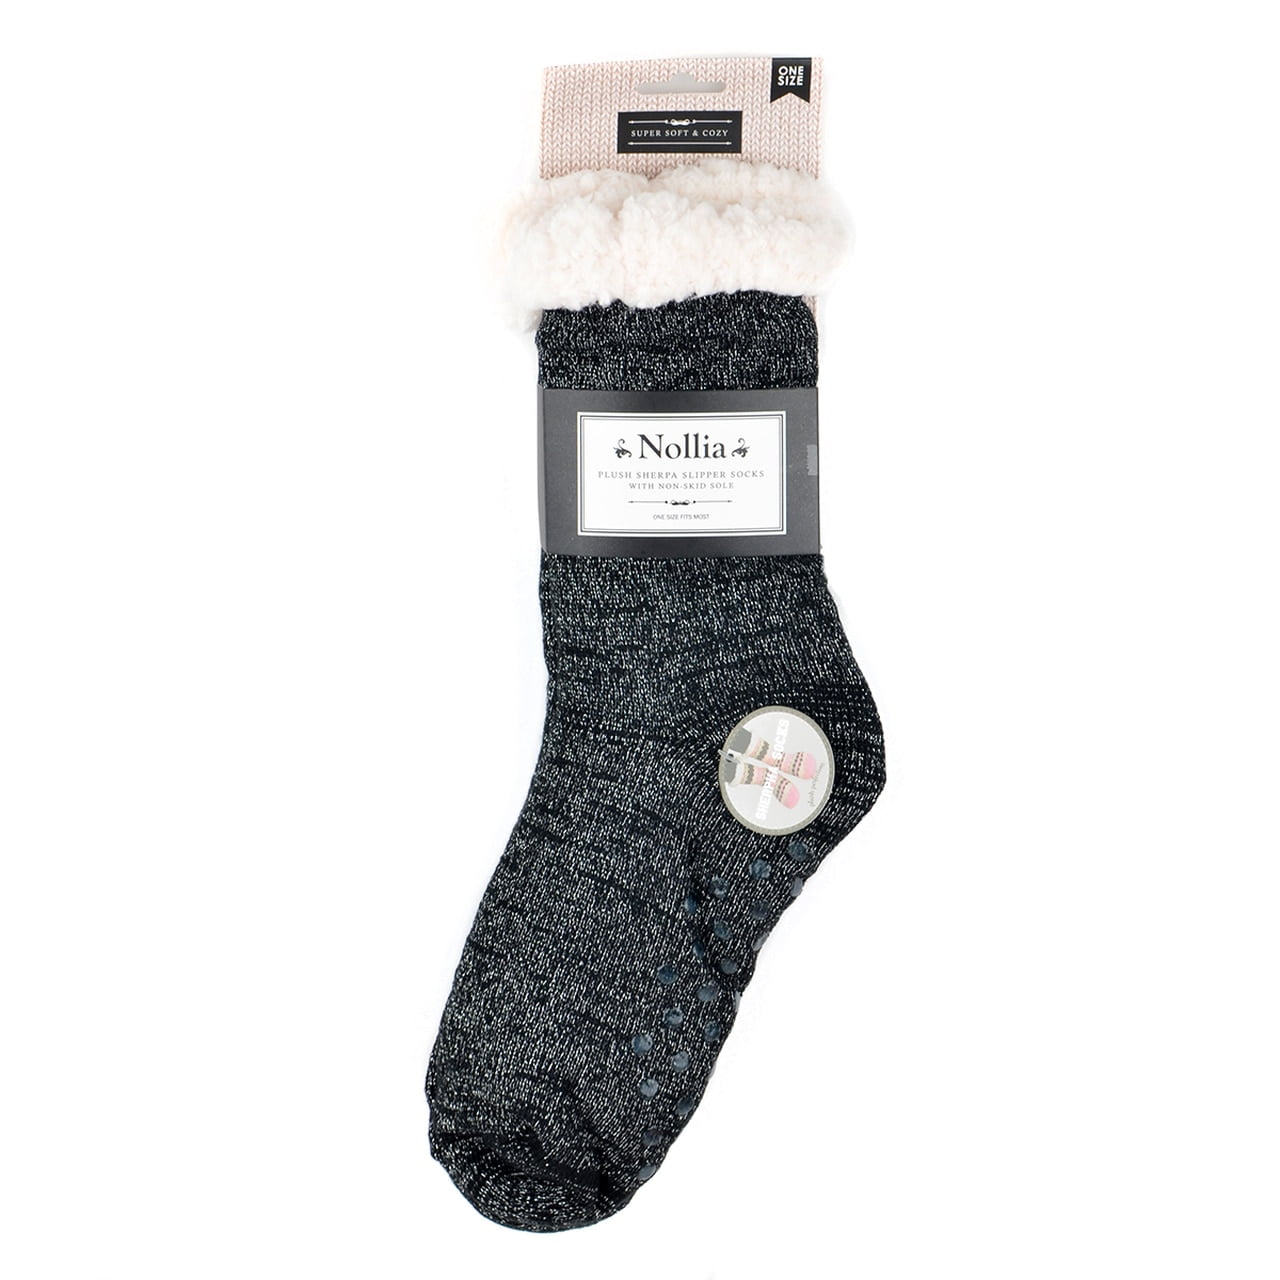 MeMoi Ladies Slipper Socks Gripper Sole Sz S/M 6-7.5 Great Christmas Gift 2 